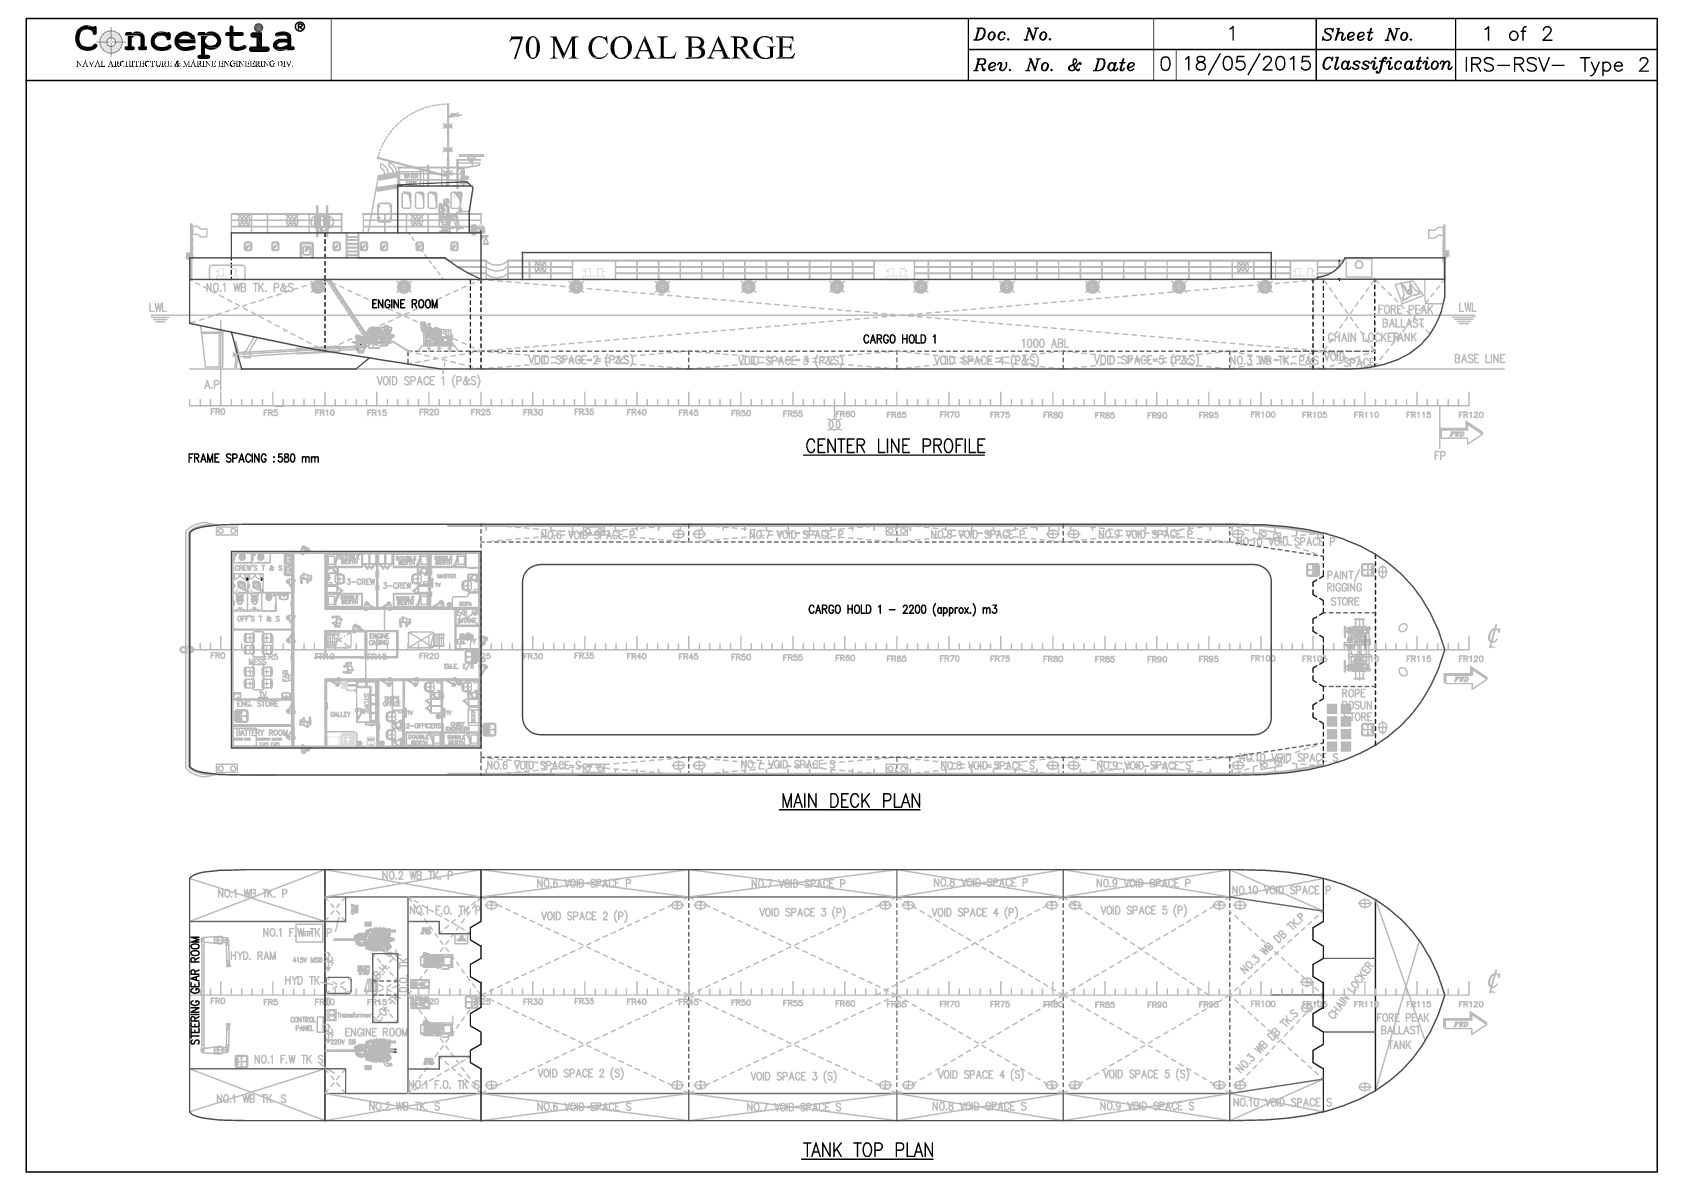 Barge Design - 70 m Barge, Coal Barge Design - Conceptia: Marine